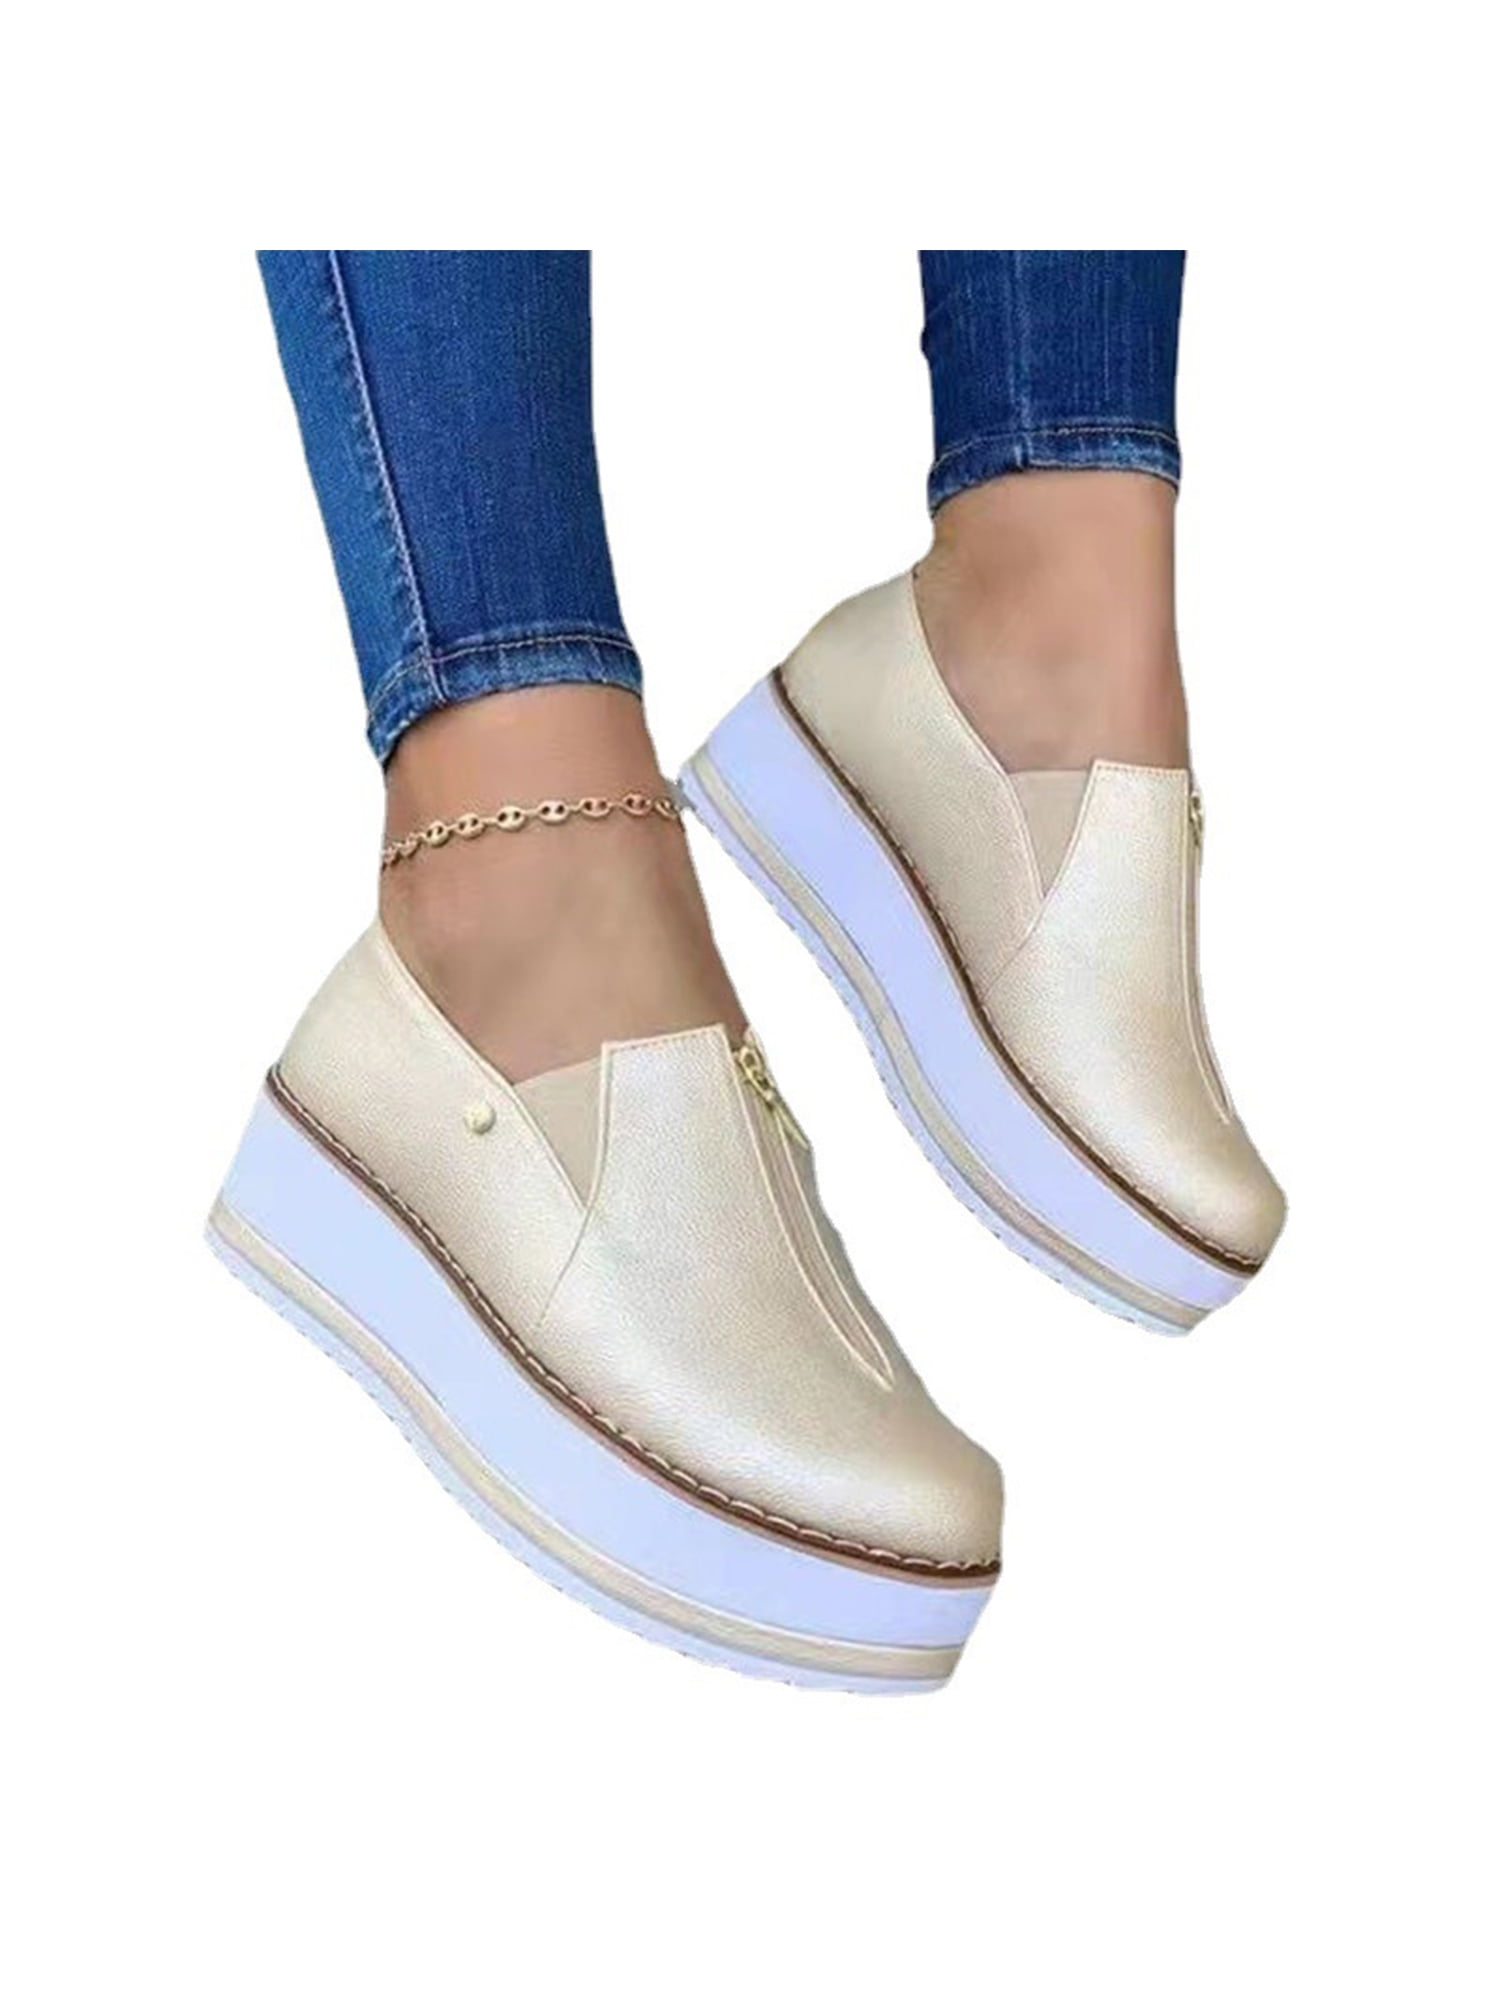 mister temperamentet Bekræfte Depression Ymiytan Women's Loafers Pumps Casual Slip On Trainers Sneakers Wedge Heel  Shoes - Walmart.com